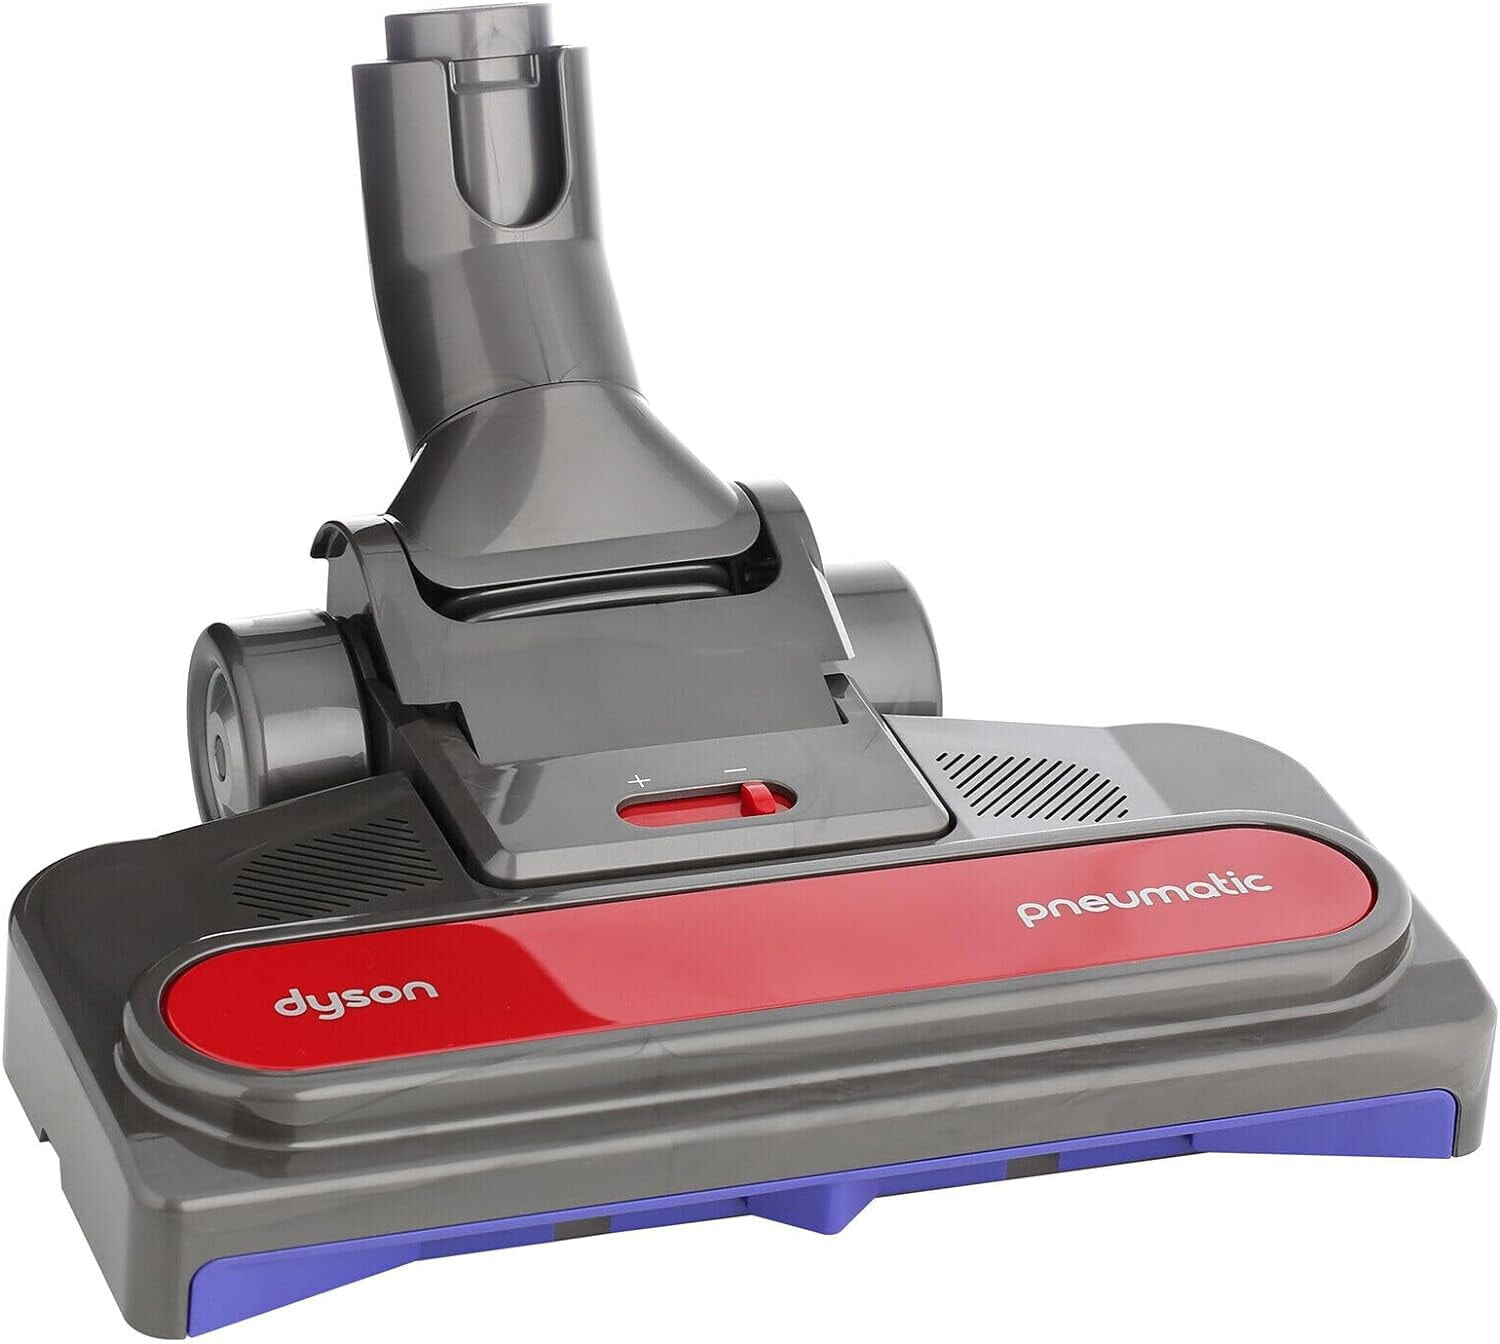 Dyson Original Pneumatic Musclehead Floor Brush Tool CY27 Vacuum Cleaner Quick Release